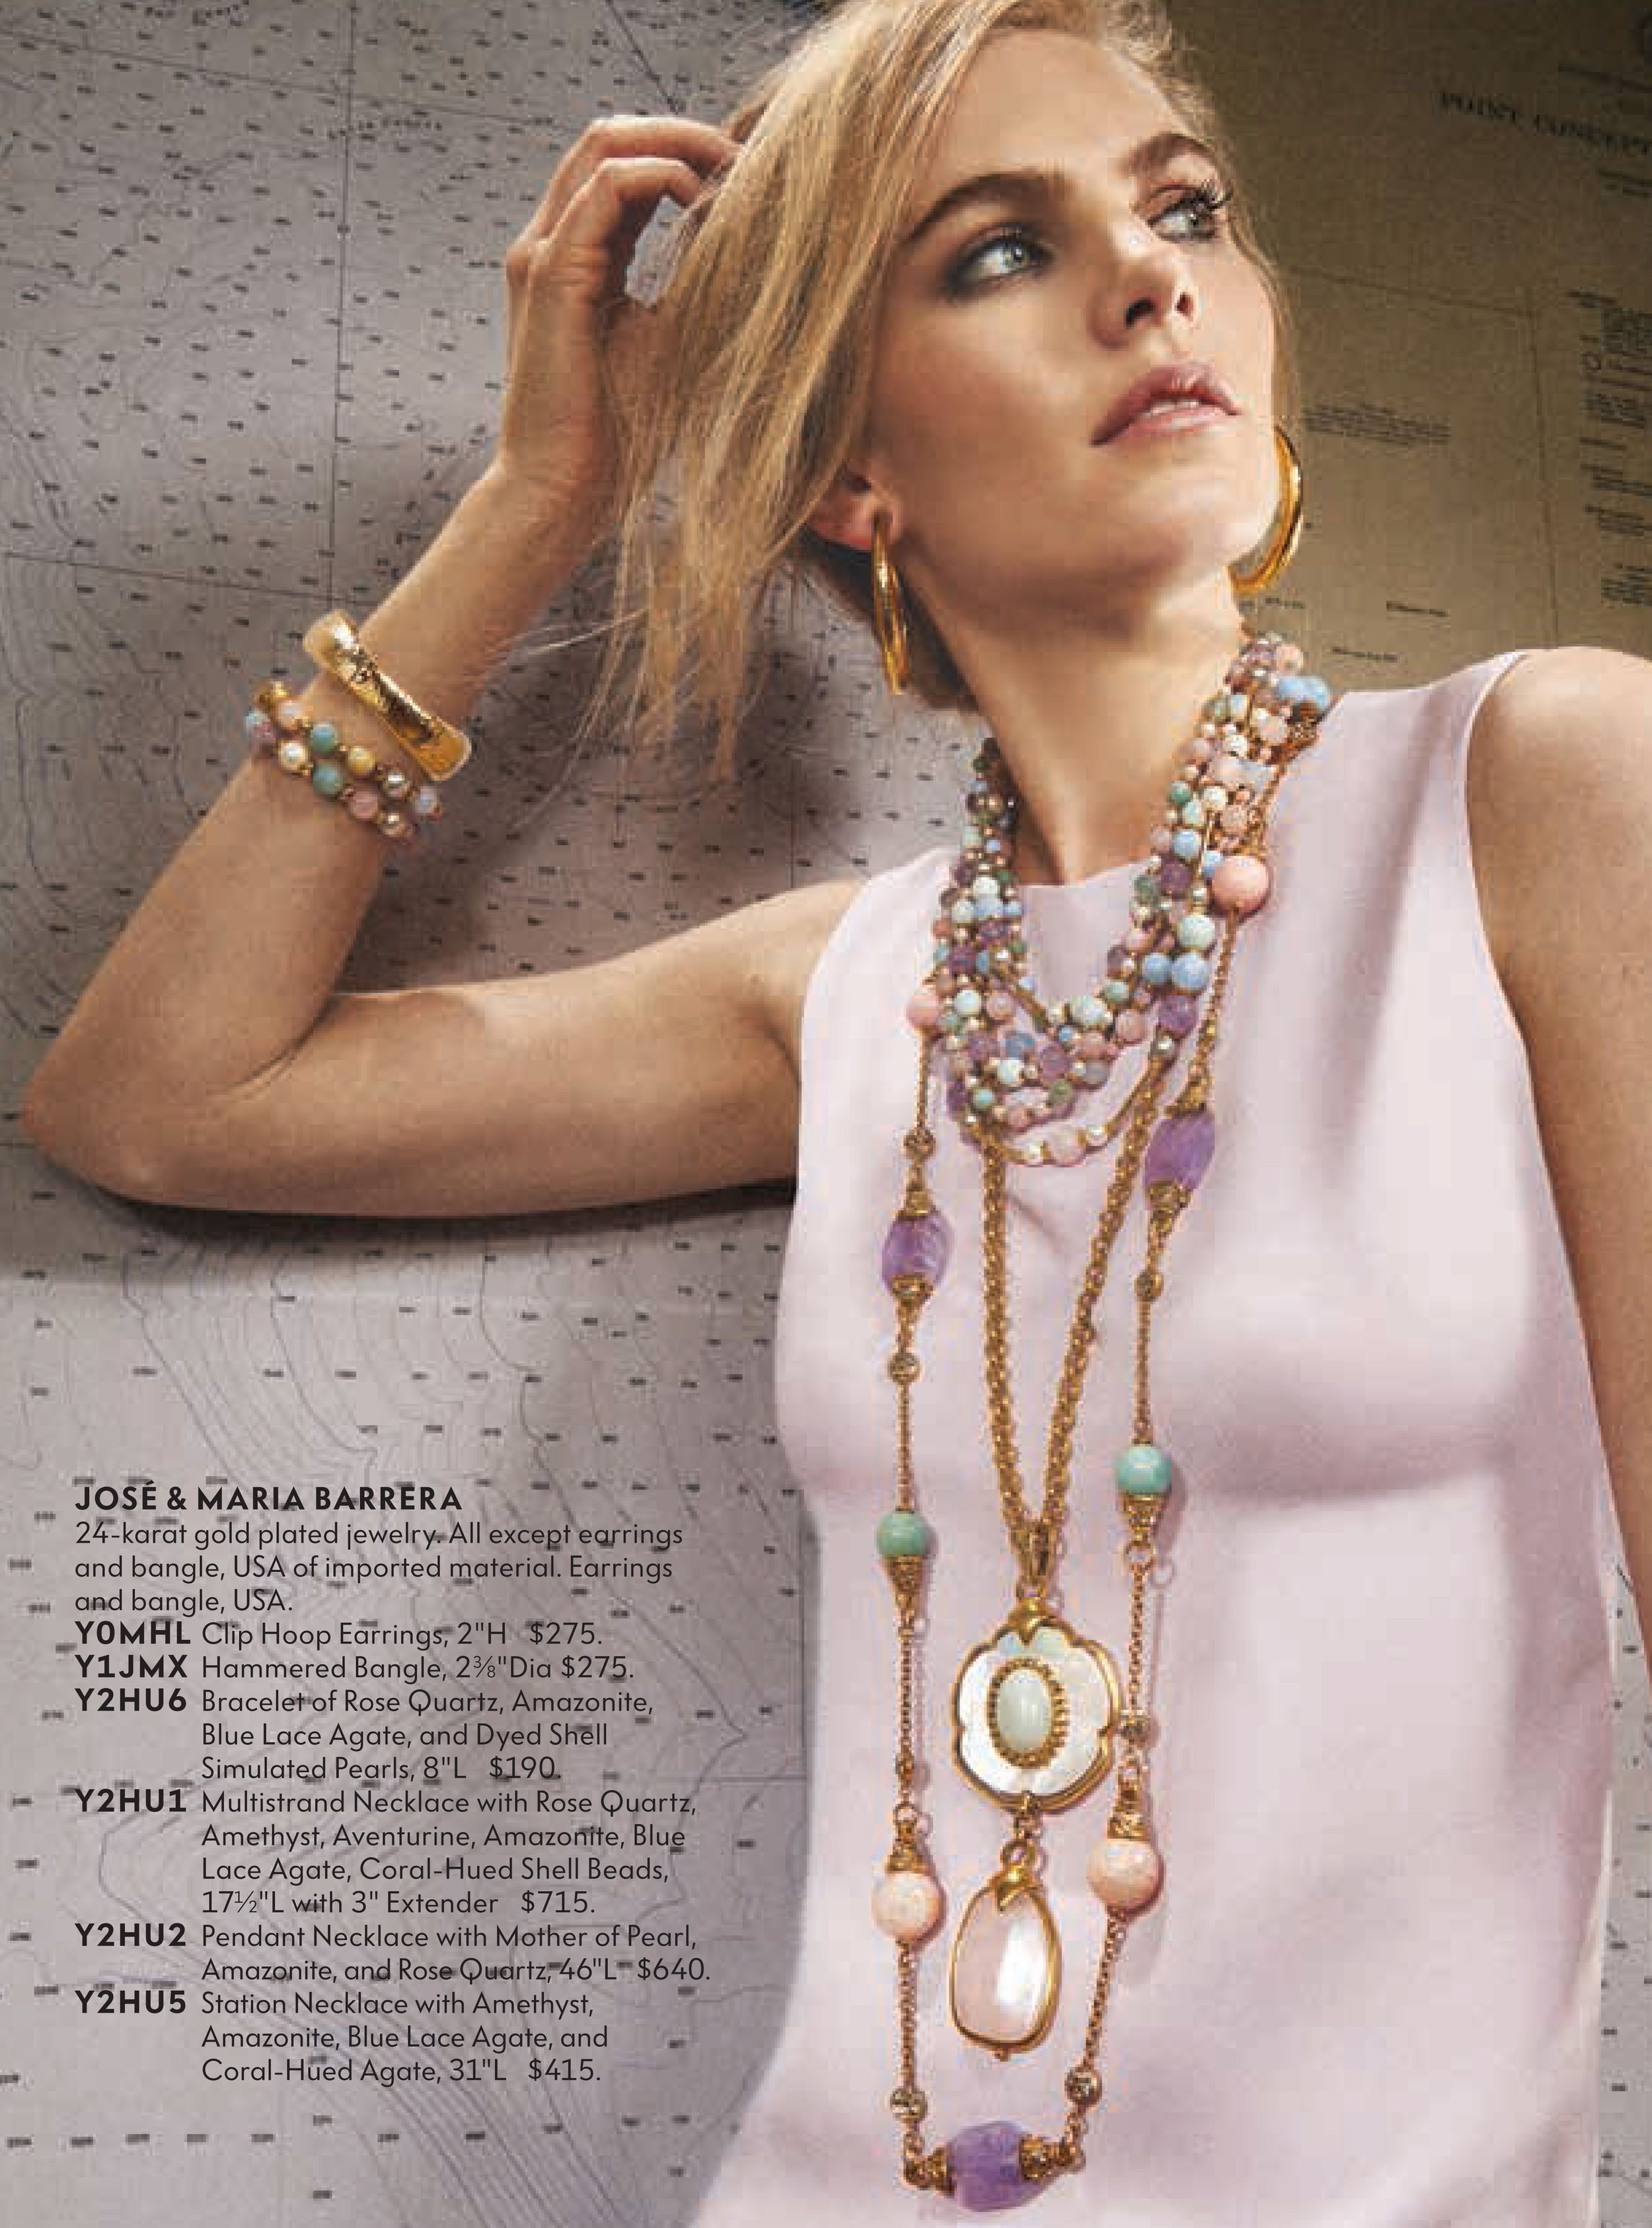 Neiman Marcus Holiday 2015 Jewelry Looks